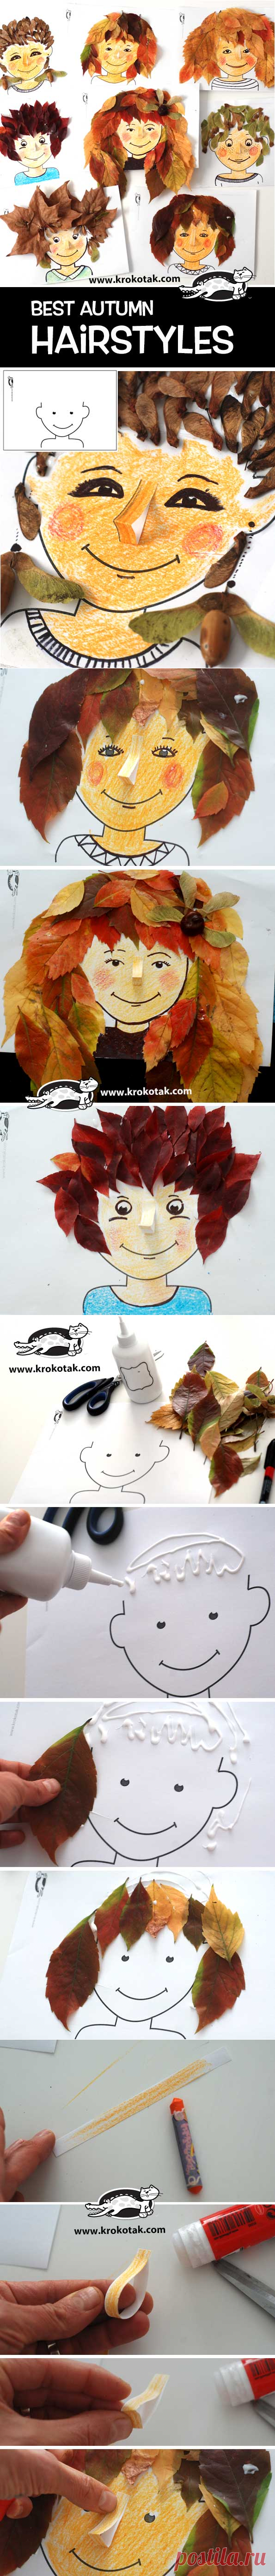 krokotak | Best Autumn Hairstyles